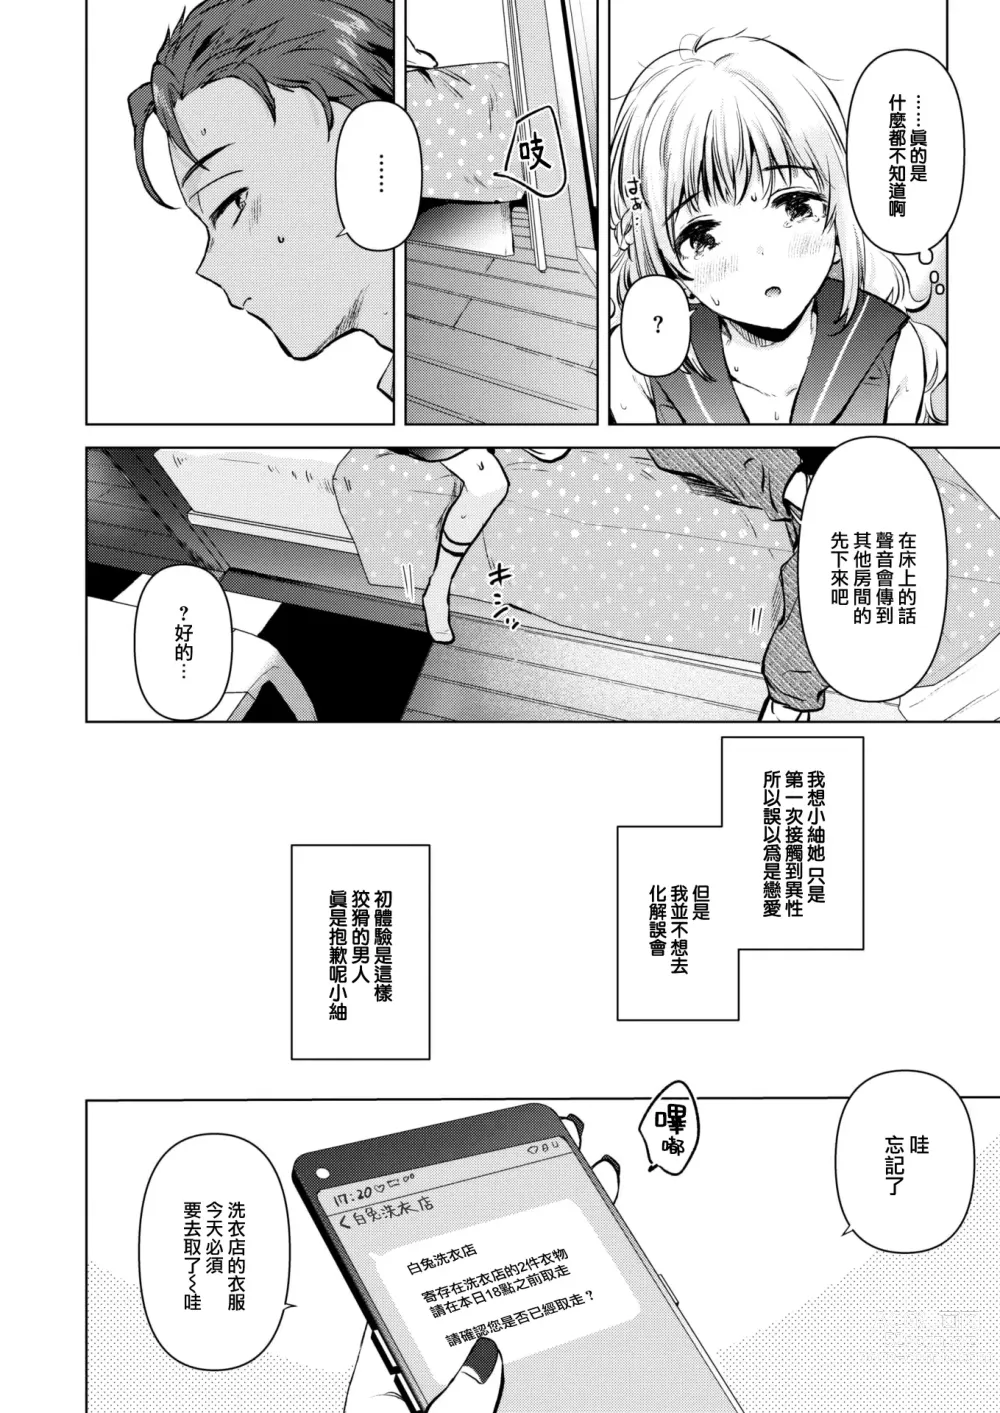 Page 17 of manga Tomodachi no Imouto